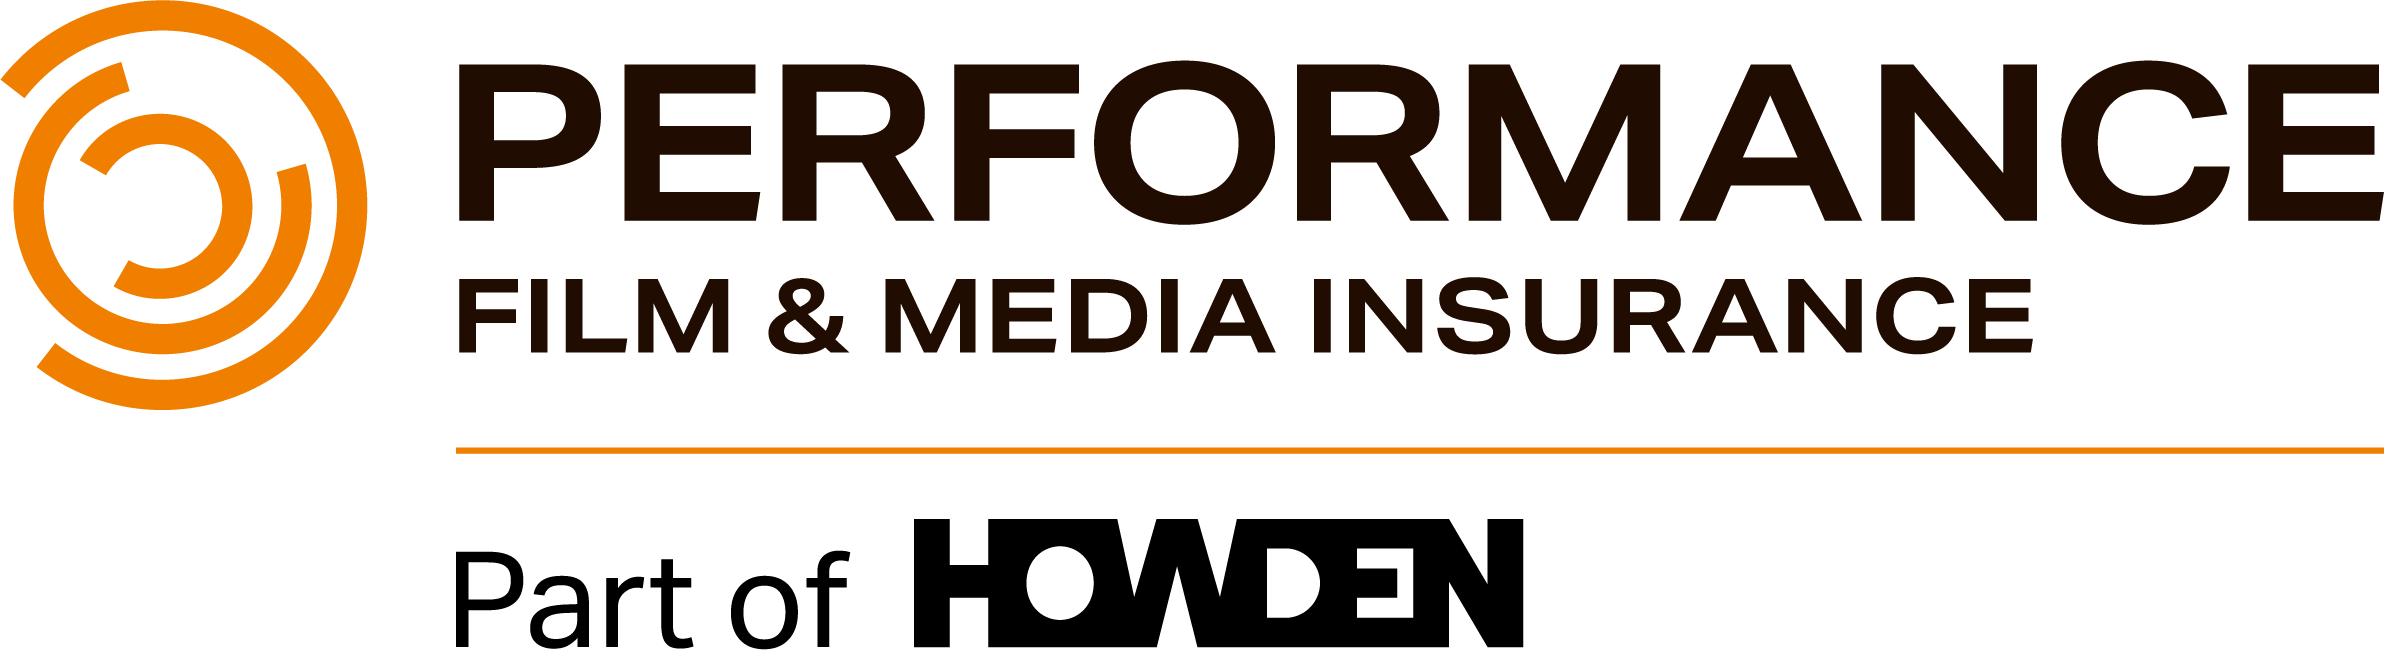 Performance Film & Media Insurance